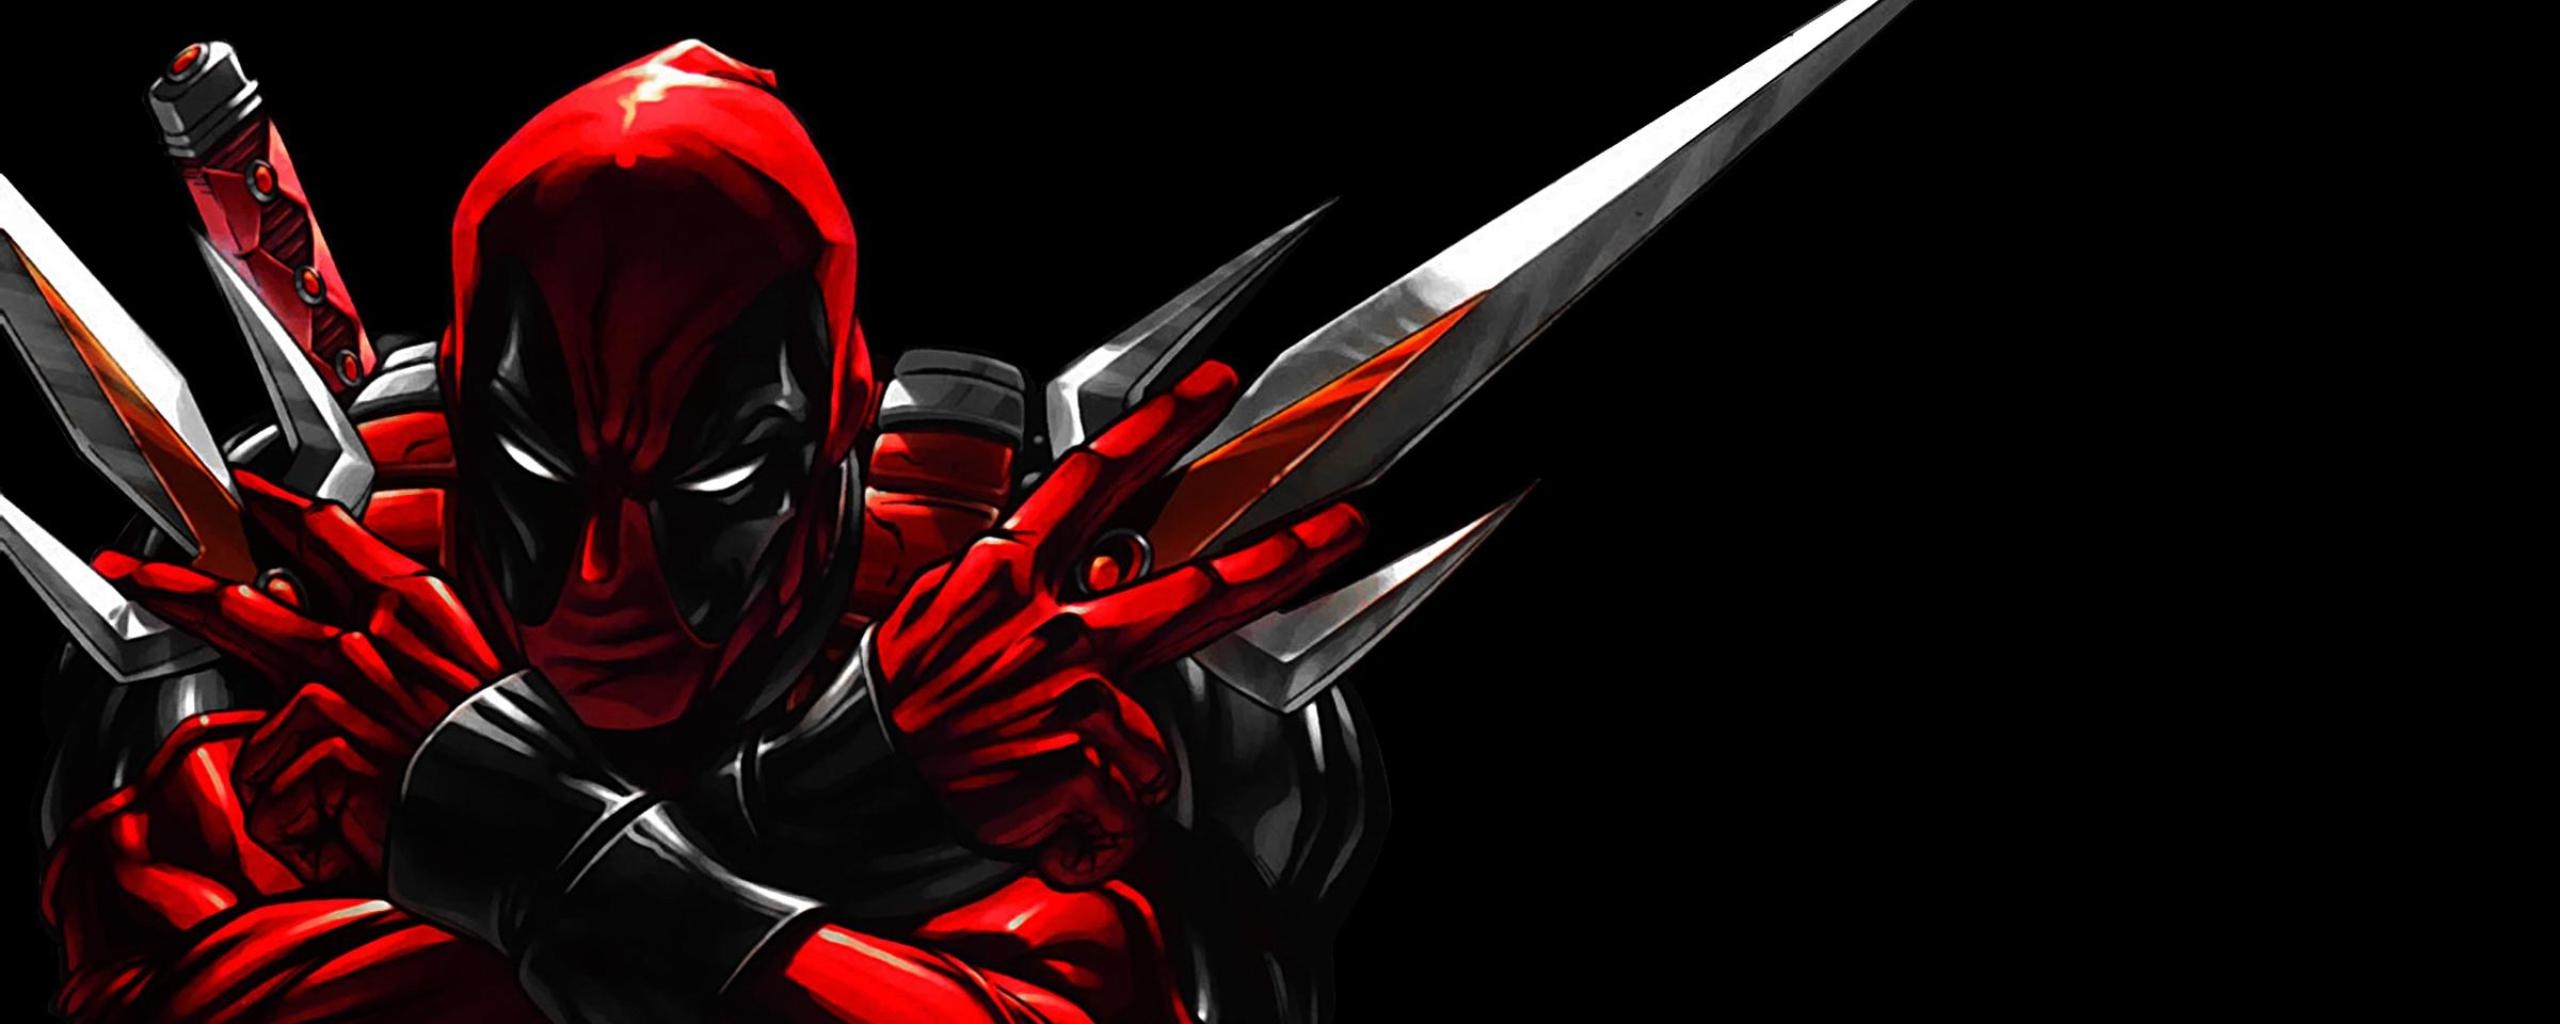  Deadpool  Red  Anti Hero Wallpapers  HD  Desktop and Mobile 